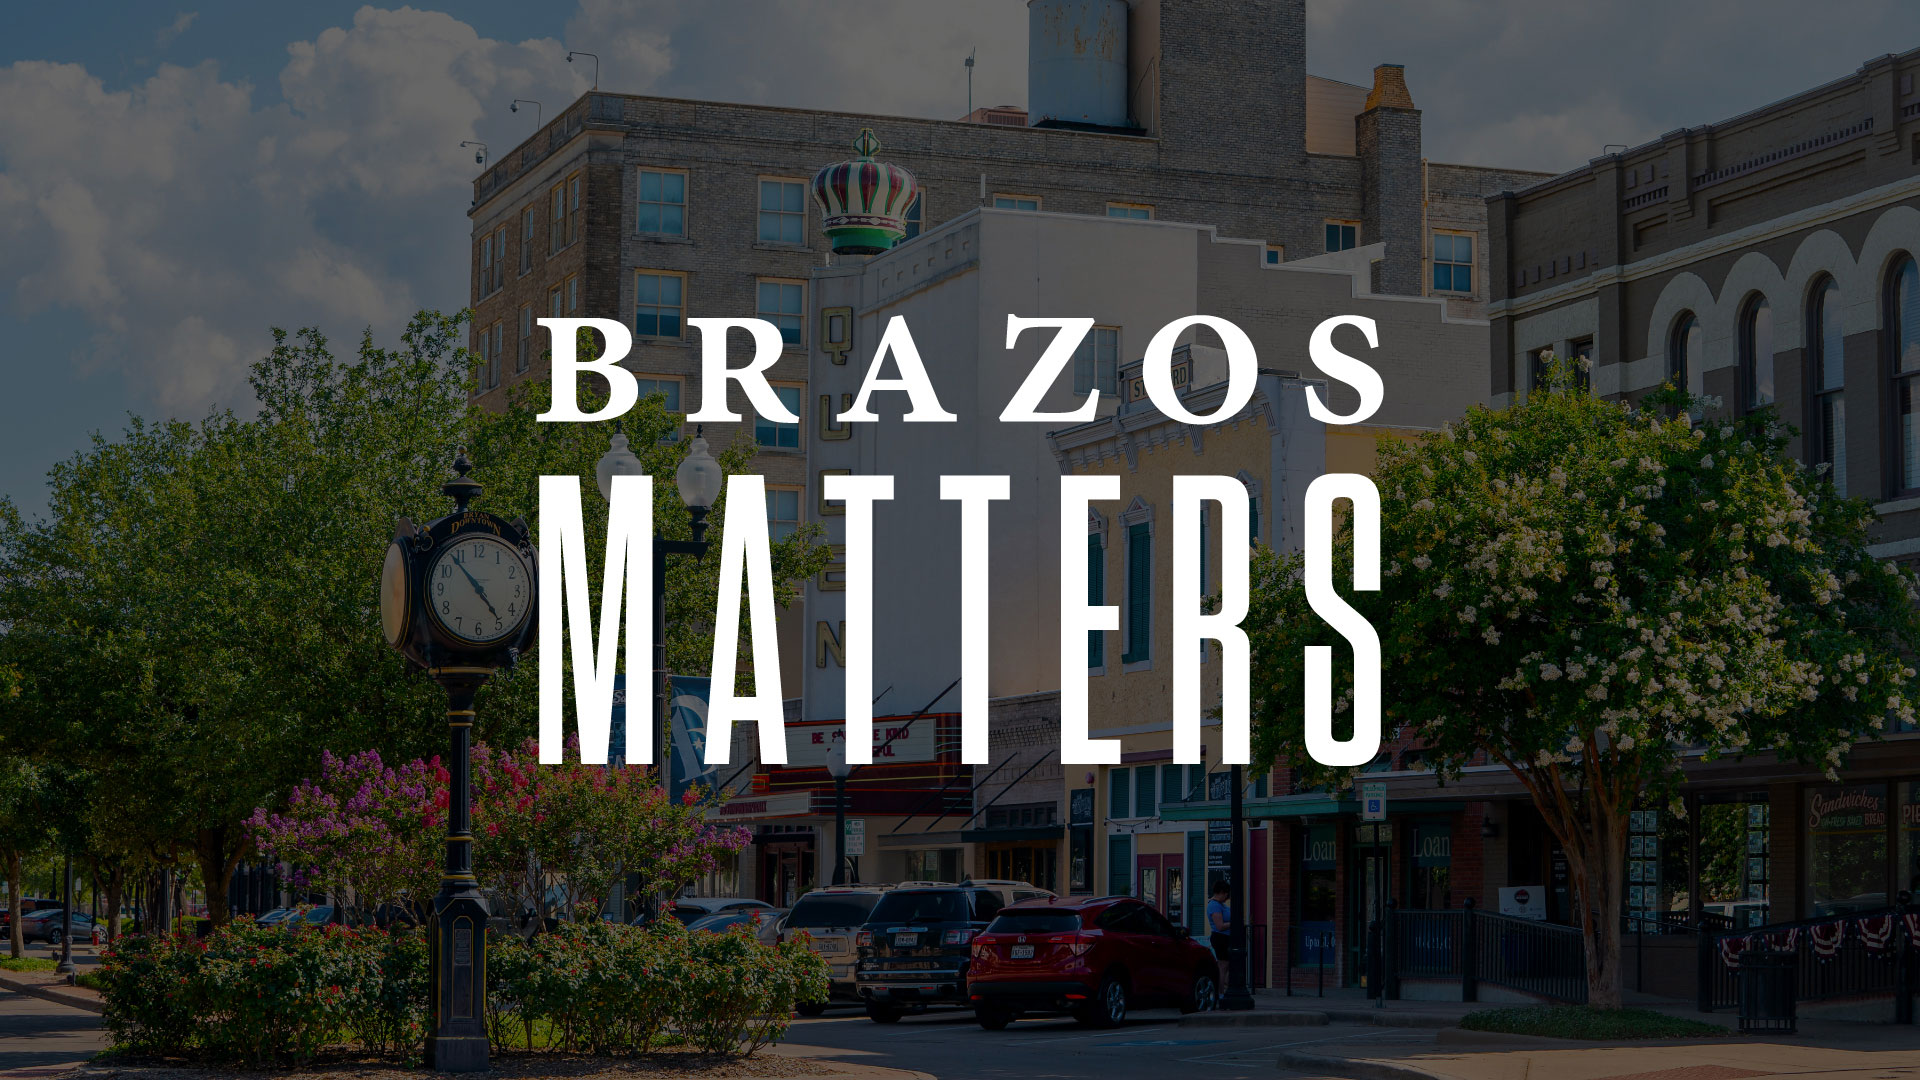 Brazos Matters program logo